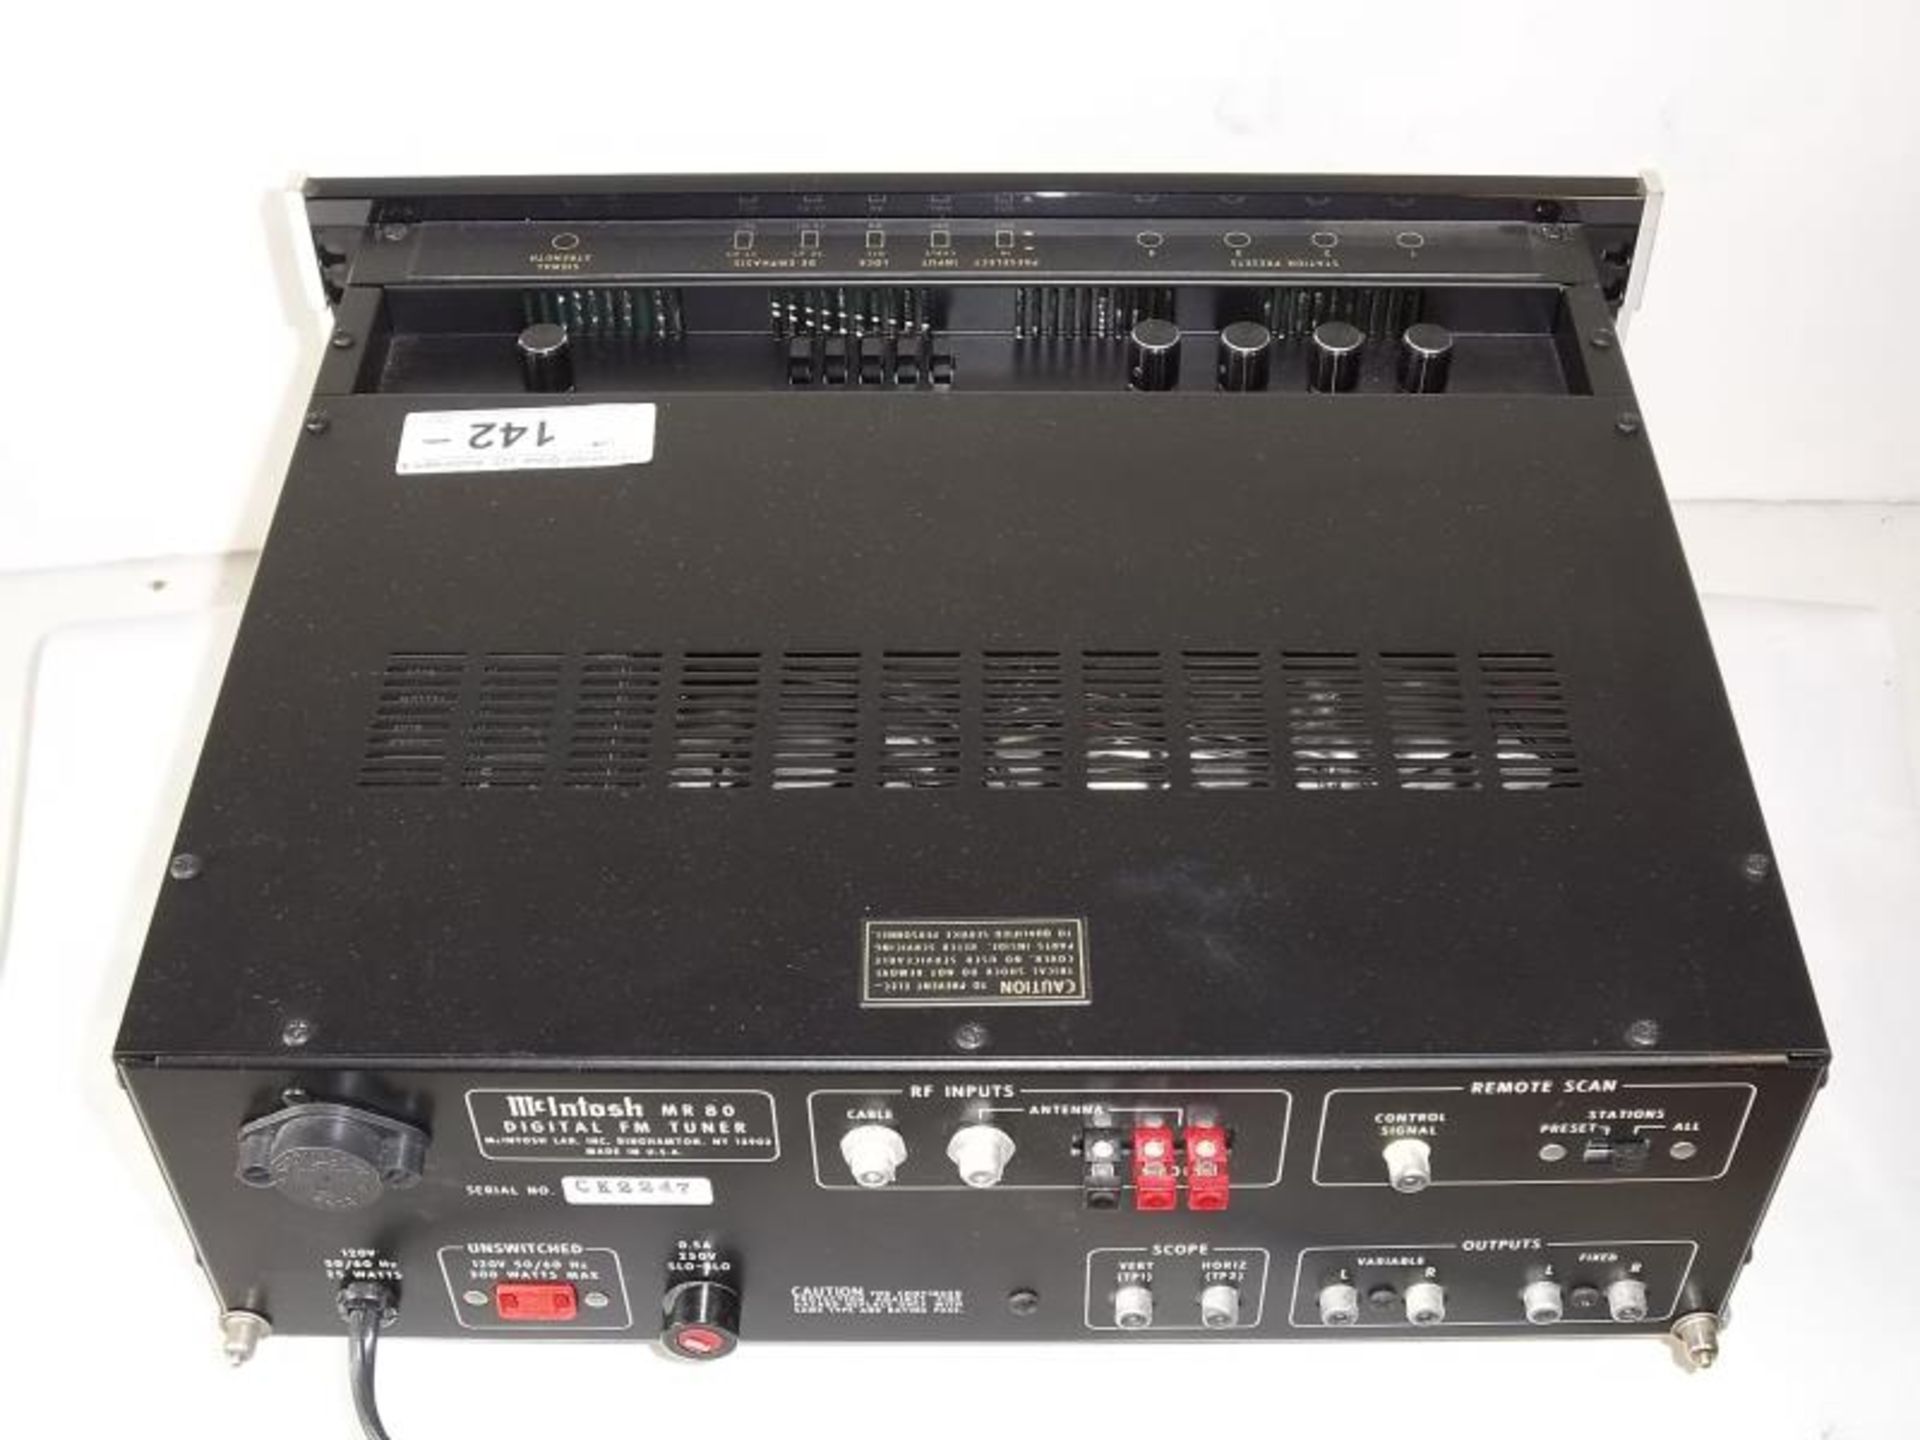 McIntosh MR 80, Digital FM Tuner, no case, s # CK2247, tested - does not power up - Image 5 of 7